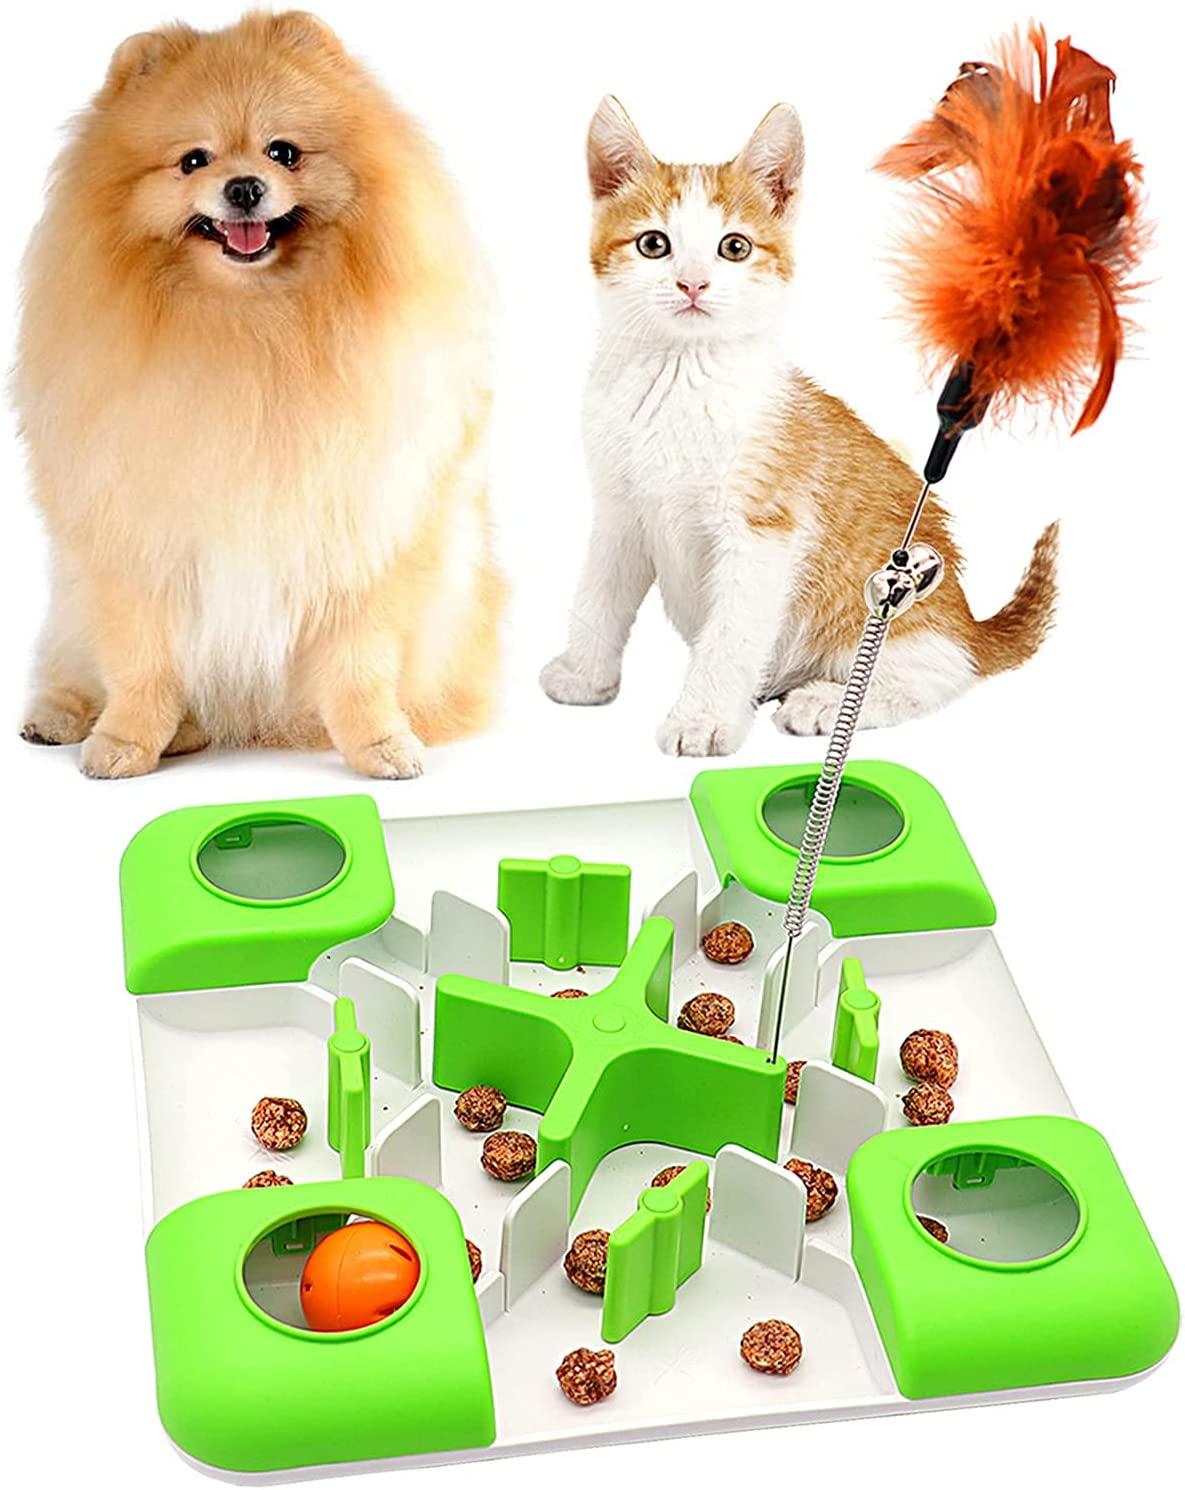 Pet Iq Sniff & Flip Treat Toy (difficulty: Intermediate), Dogs